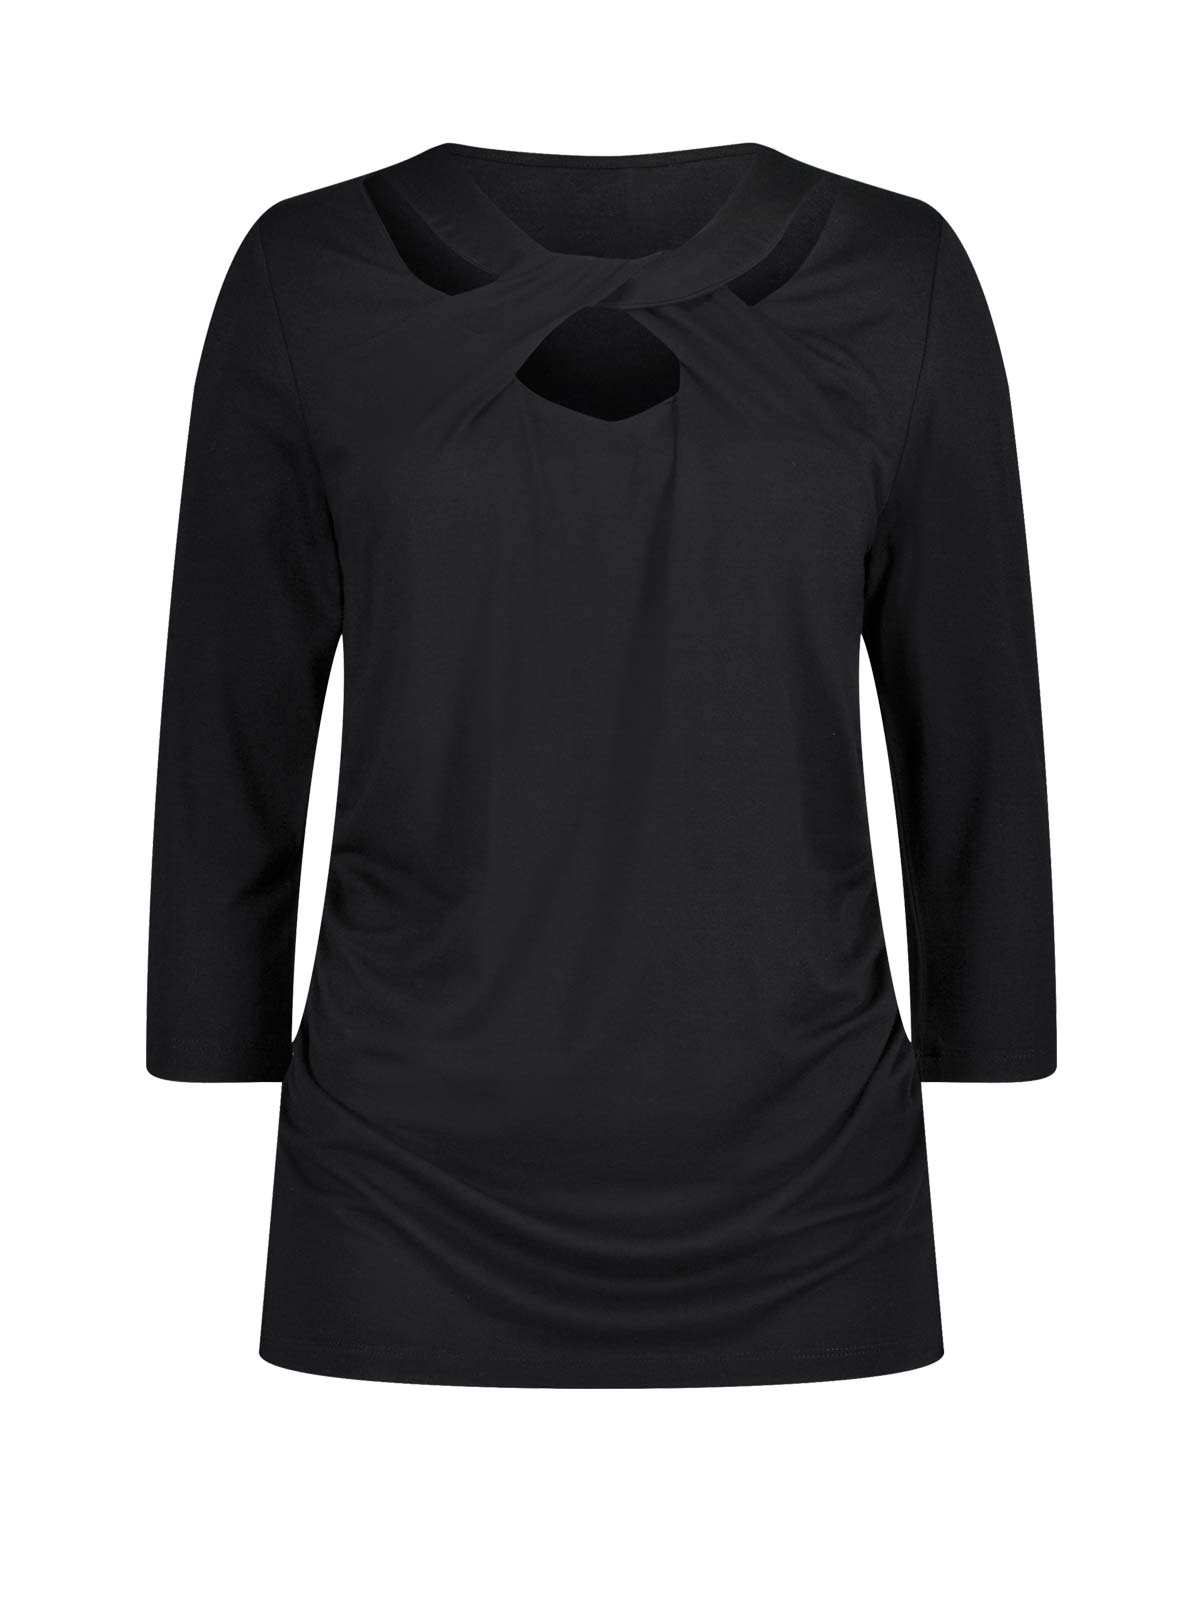 AMBRIA Damen Jerseyshirt mit Cut-Outs, schwarz